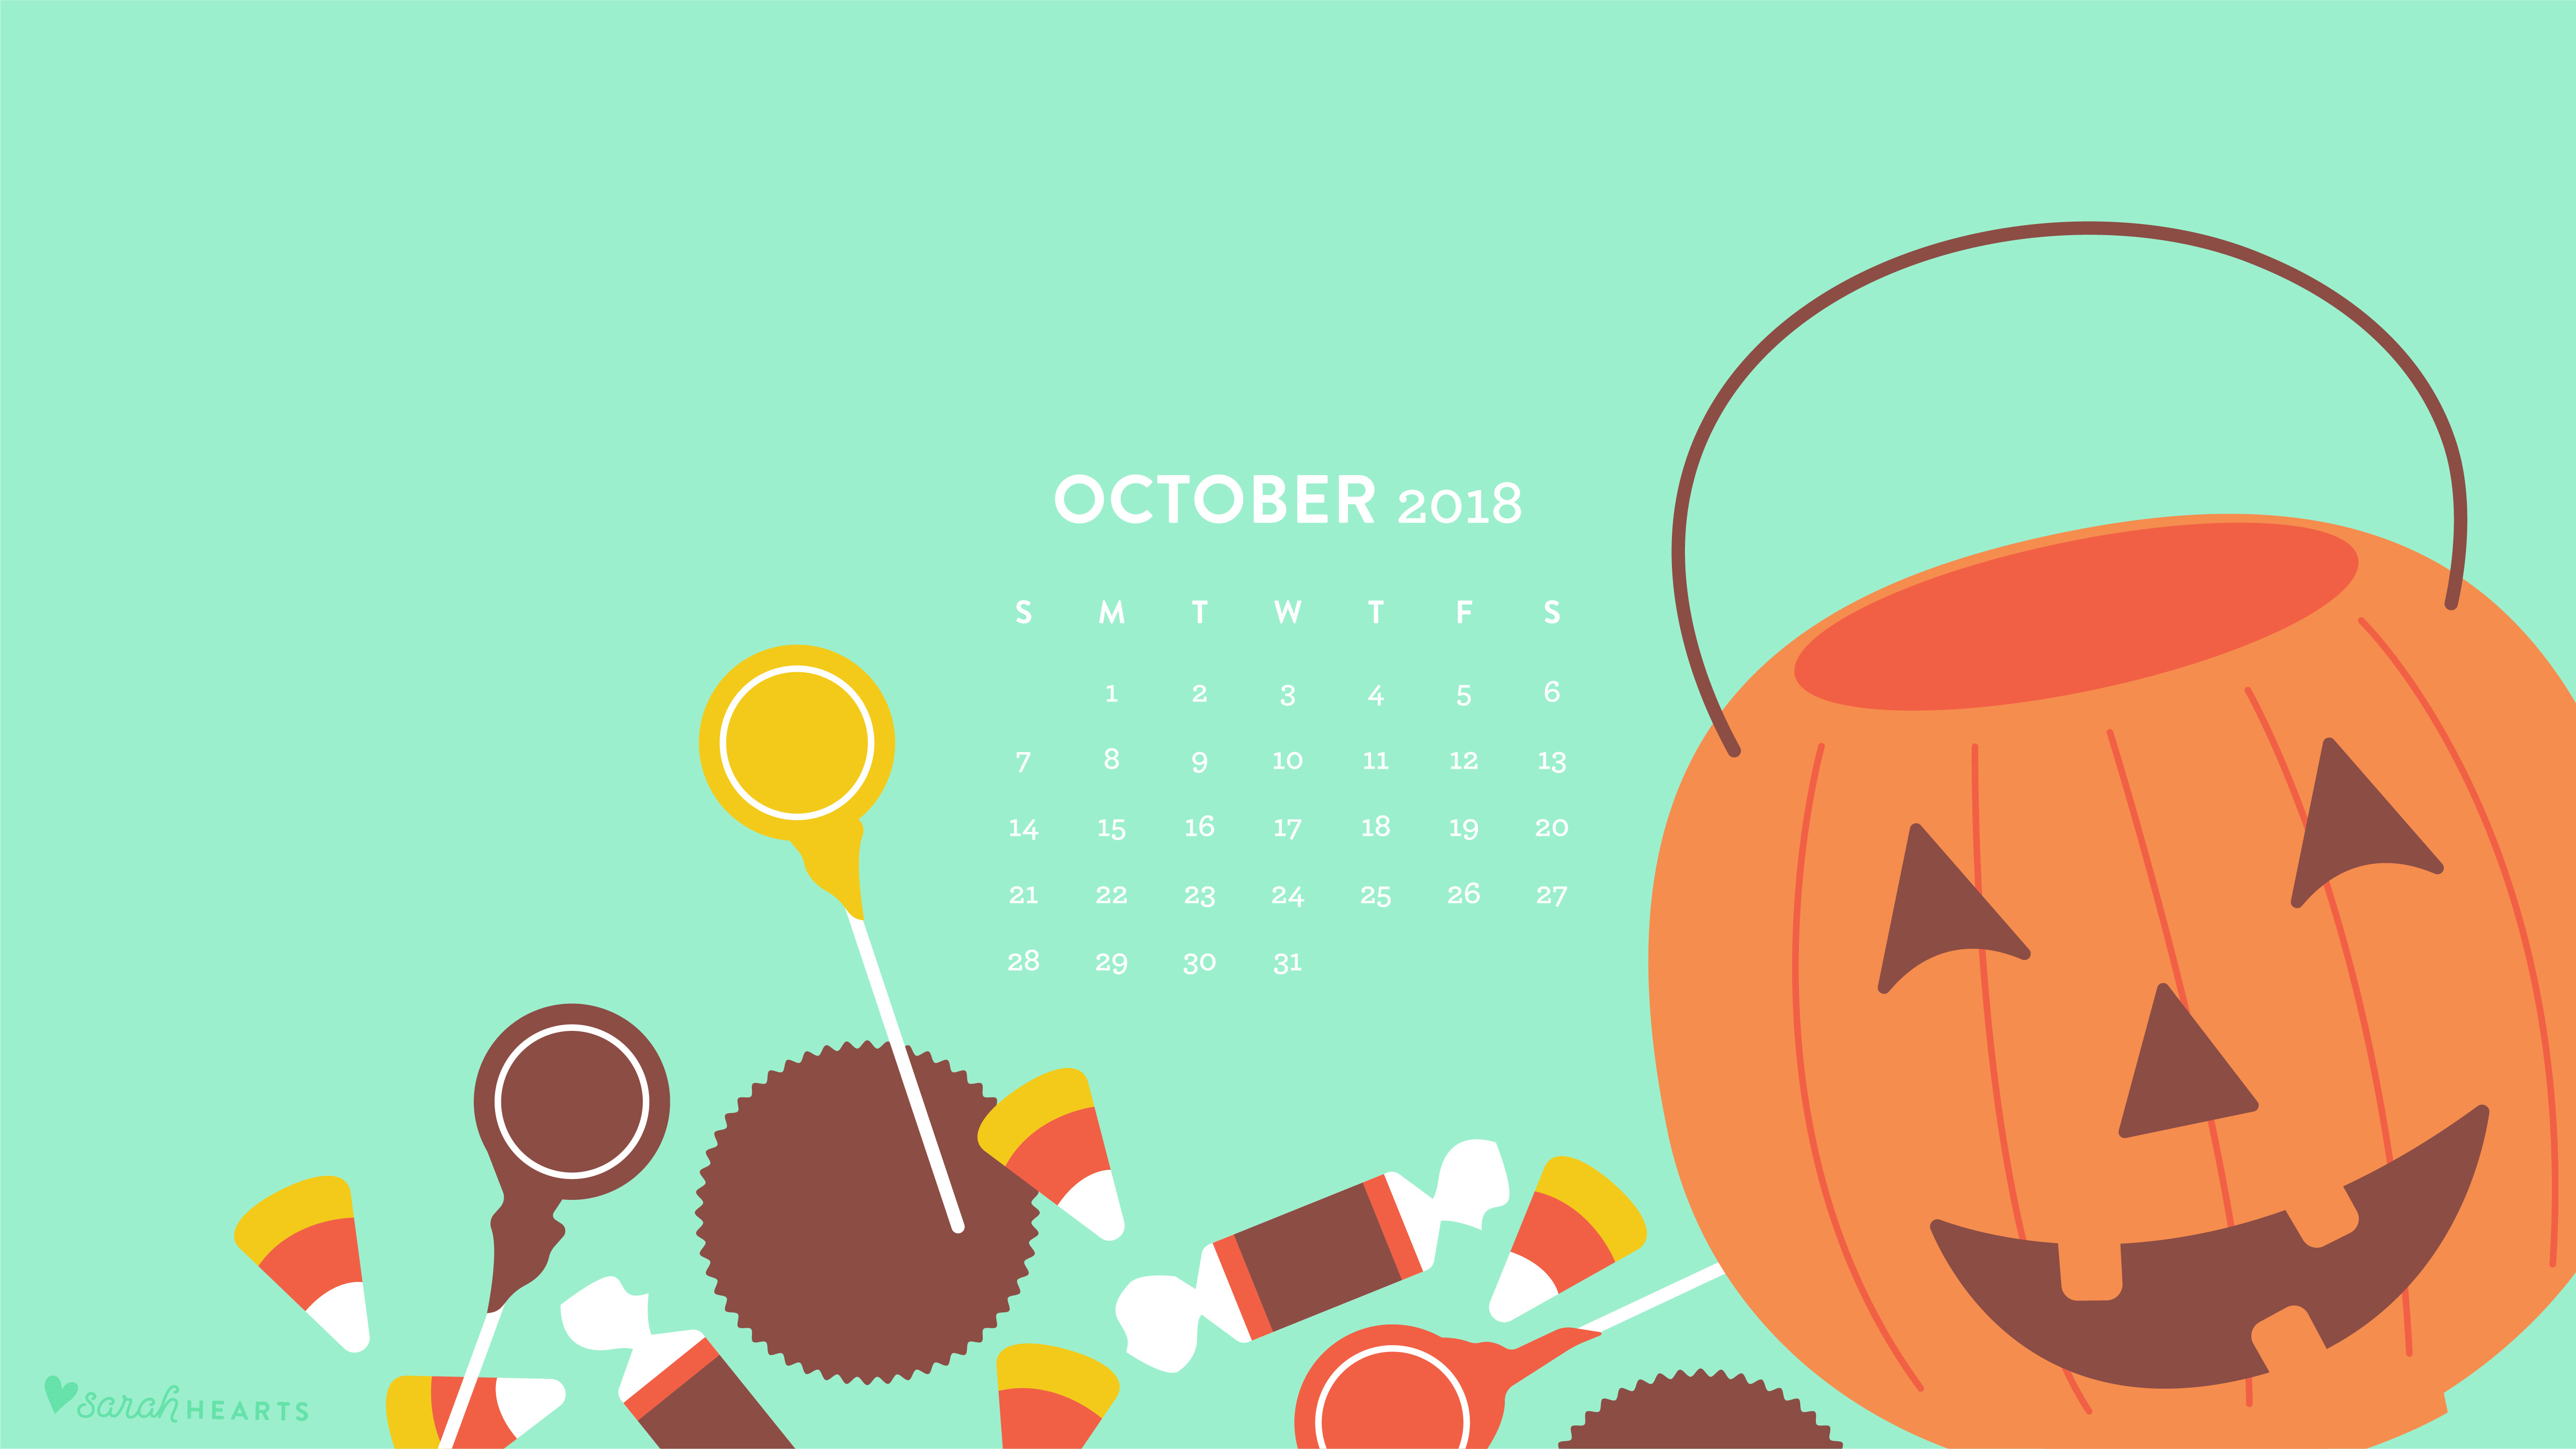 October Halloween Candy Calendar Wallpaper Sarah Hearts